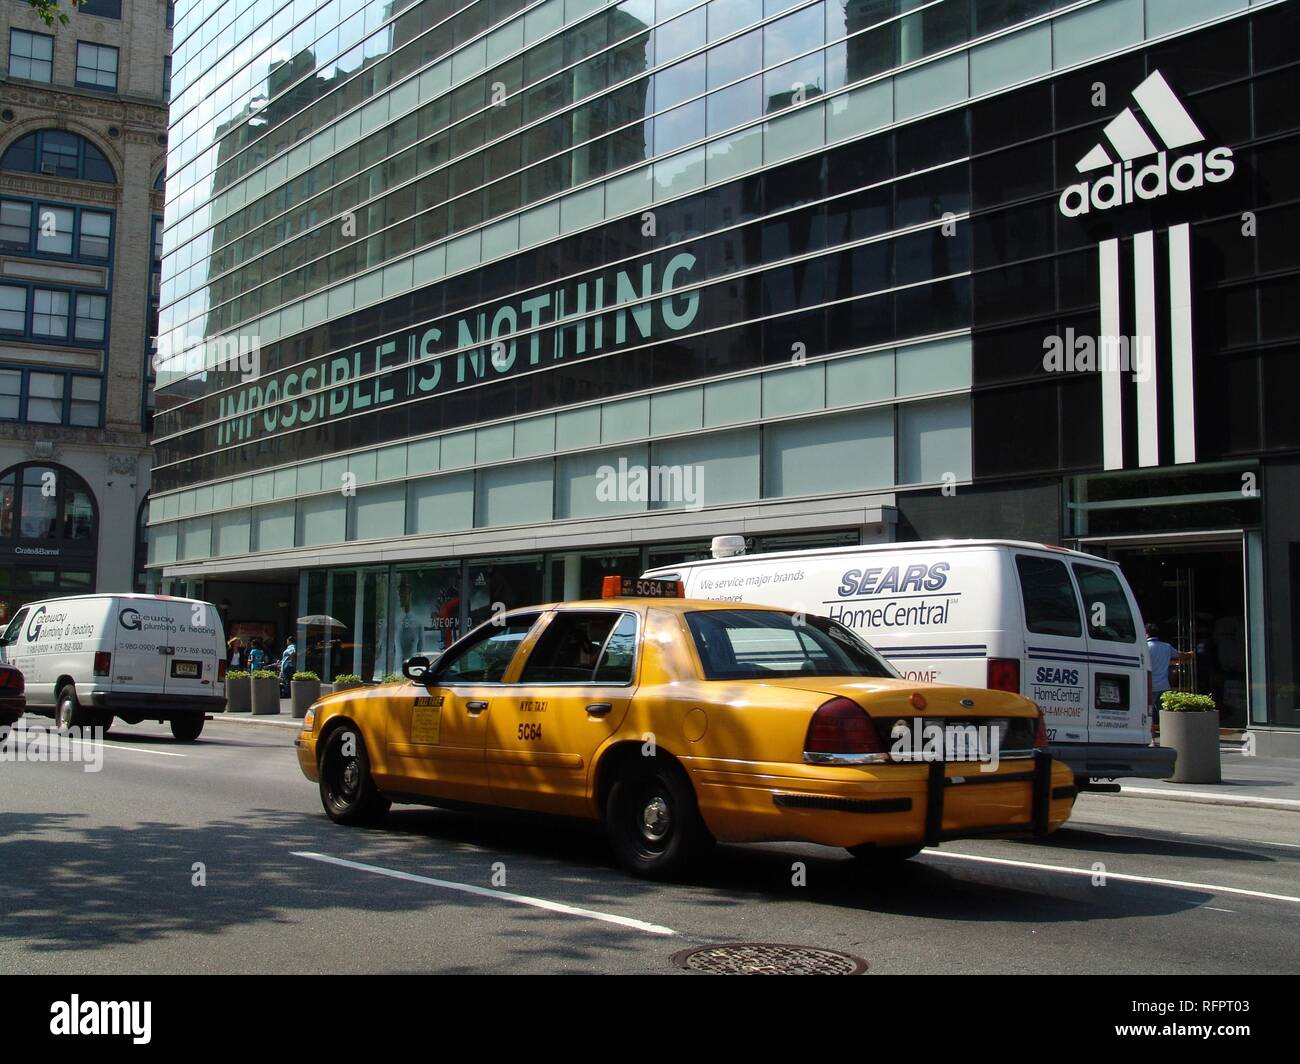 Ter ere van noot aardbeving USA, United States of America, New York City: Adidas store on Houston  Street Stock Photo - Alamy